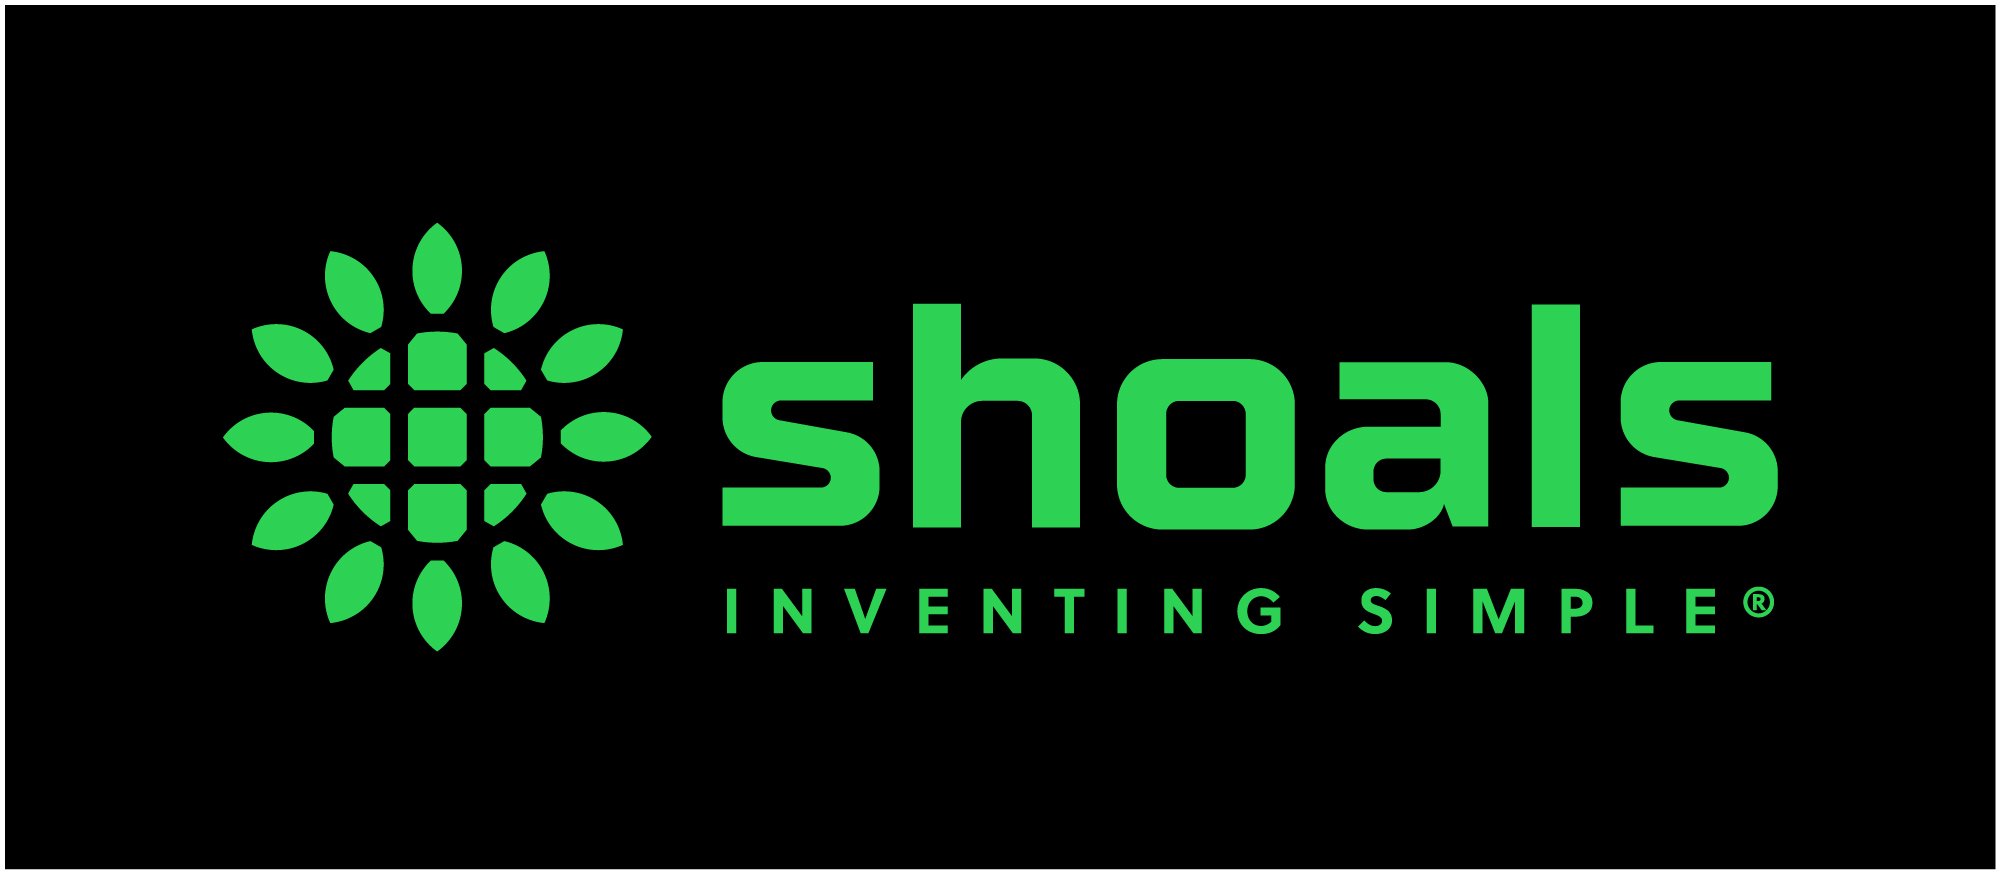 shoals logo on black